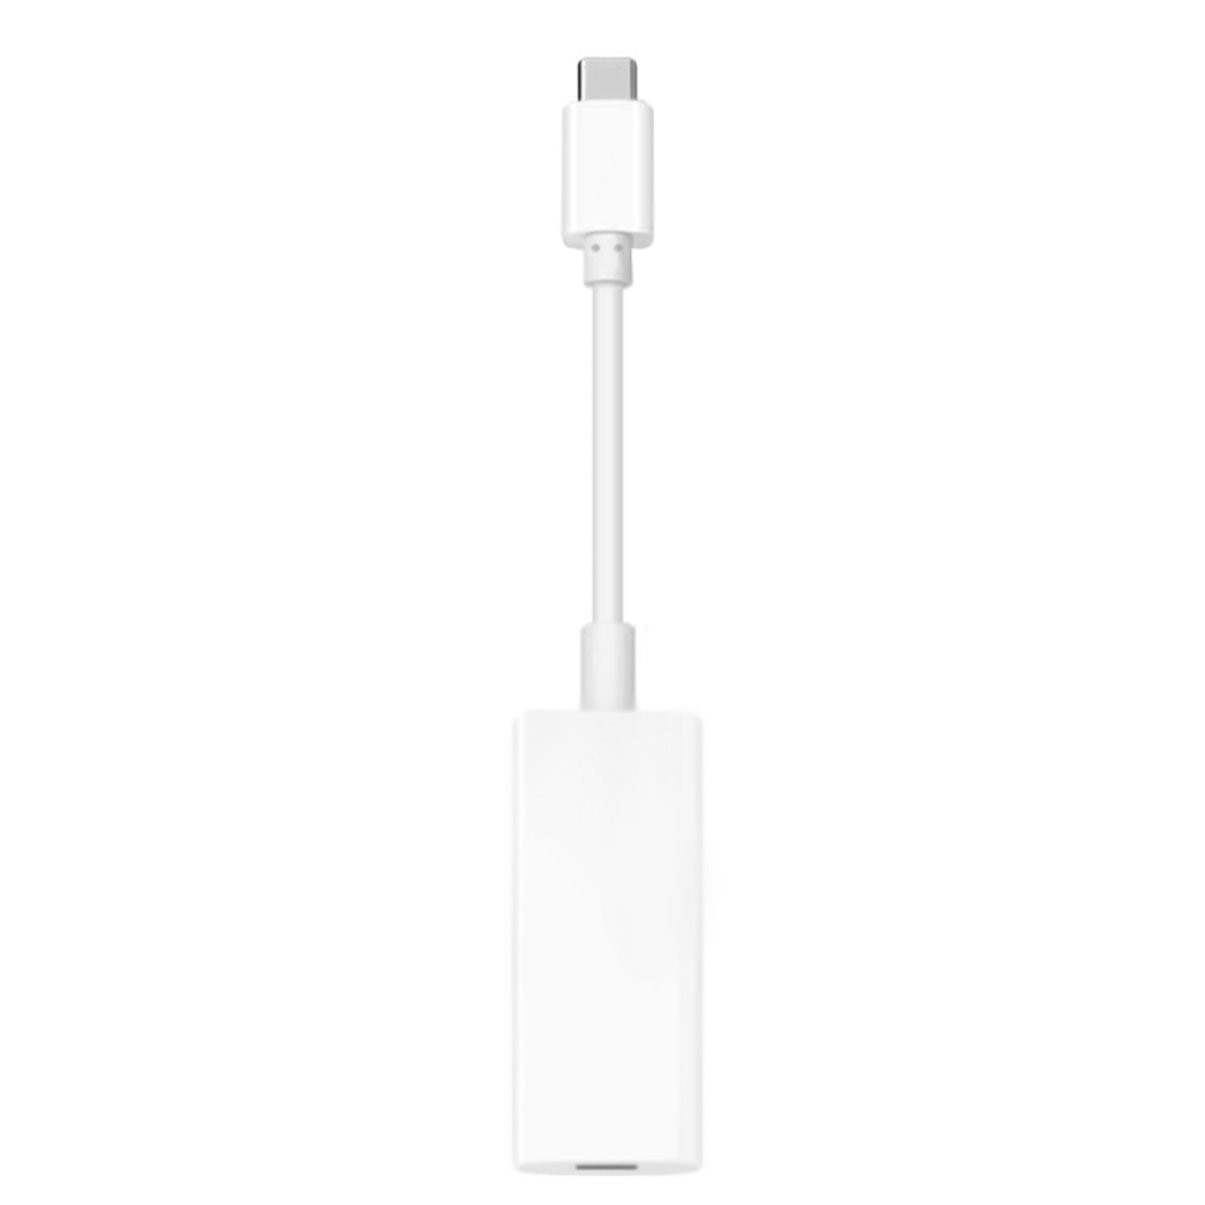 USB-C to Mini Display Port Adapter USB 3.1 Type C (Thunderbolt 3) to Thunderbolt 2 Adapter For MacBook Pro